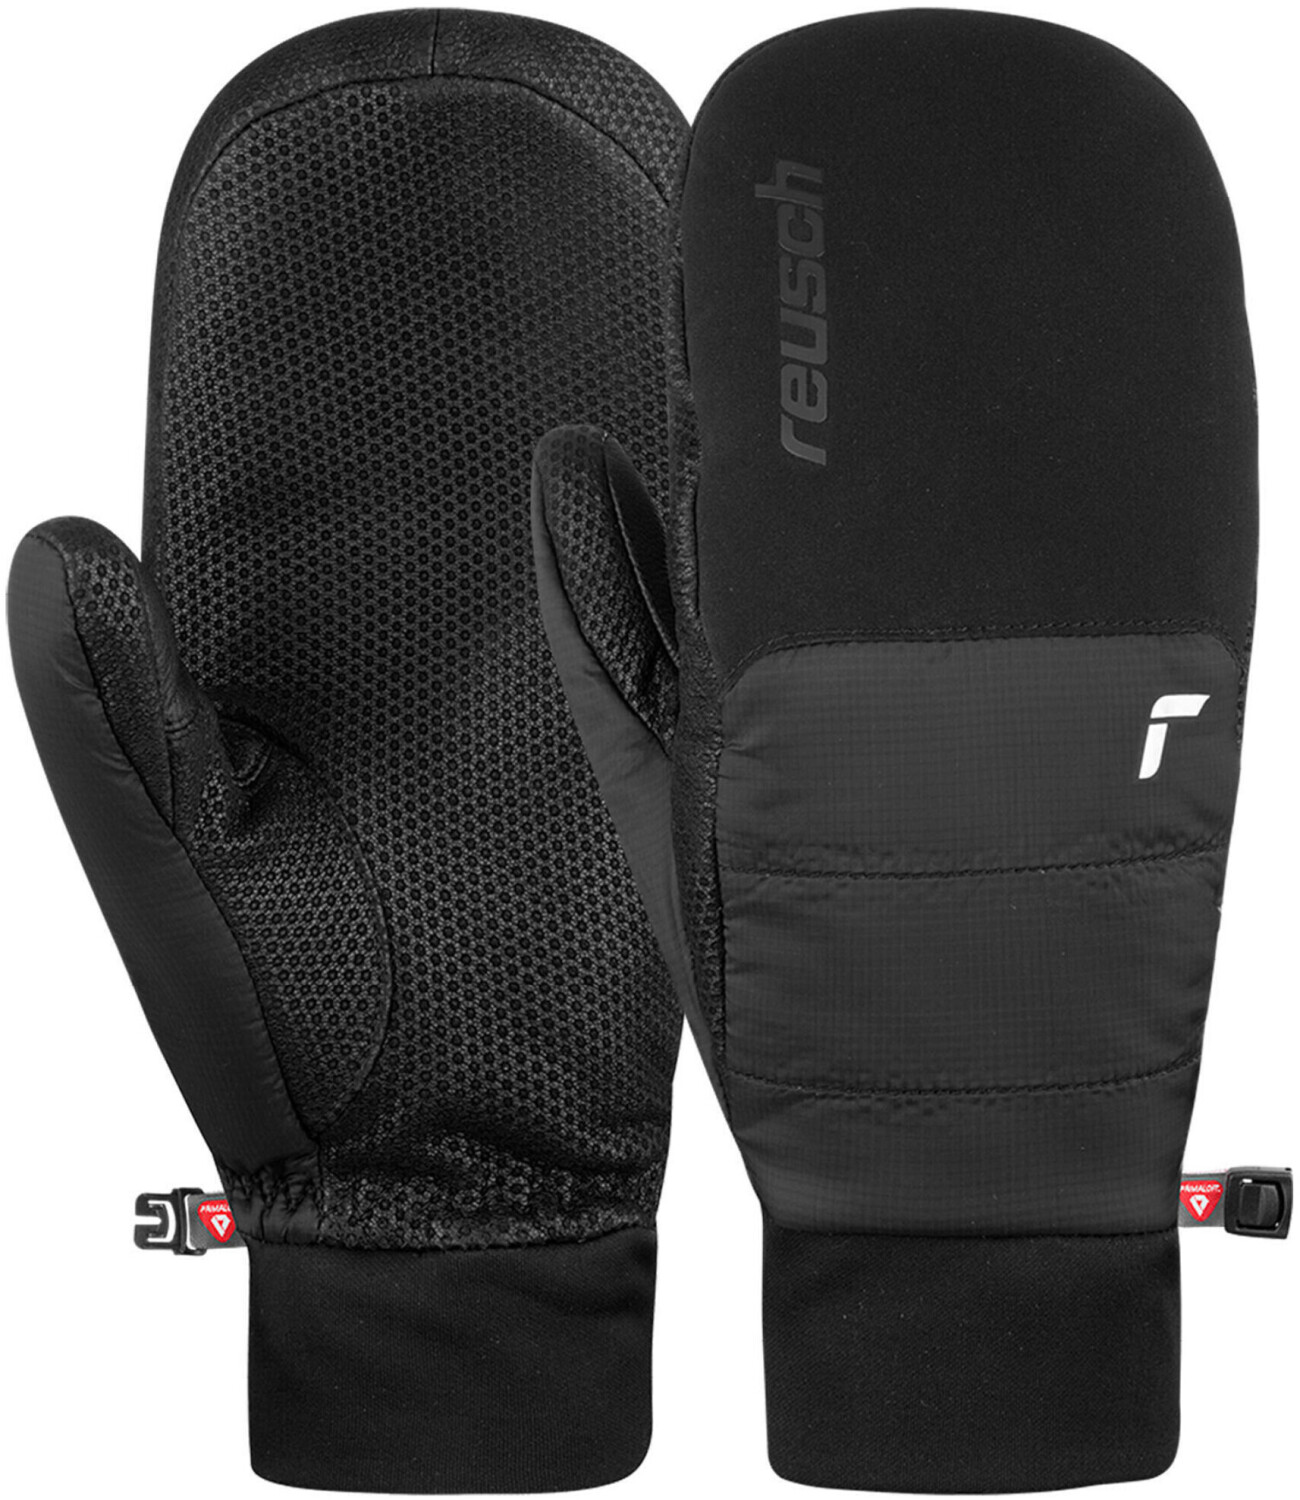 Reusch Kavik Touch-Tec Ski Gloves black/silver ab 58,45 € | Preisvergleich  bei